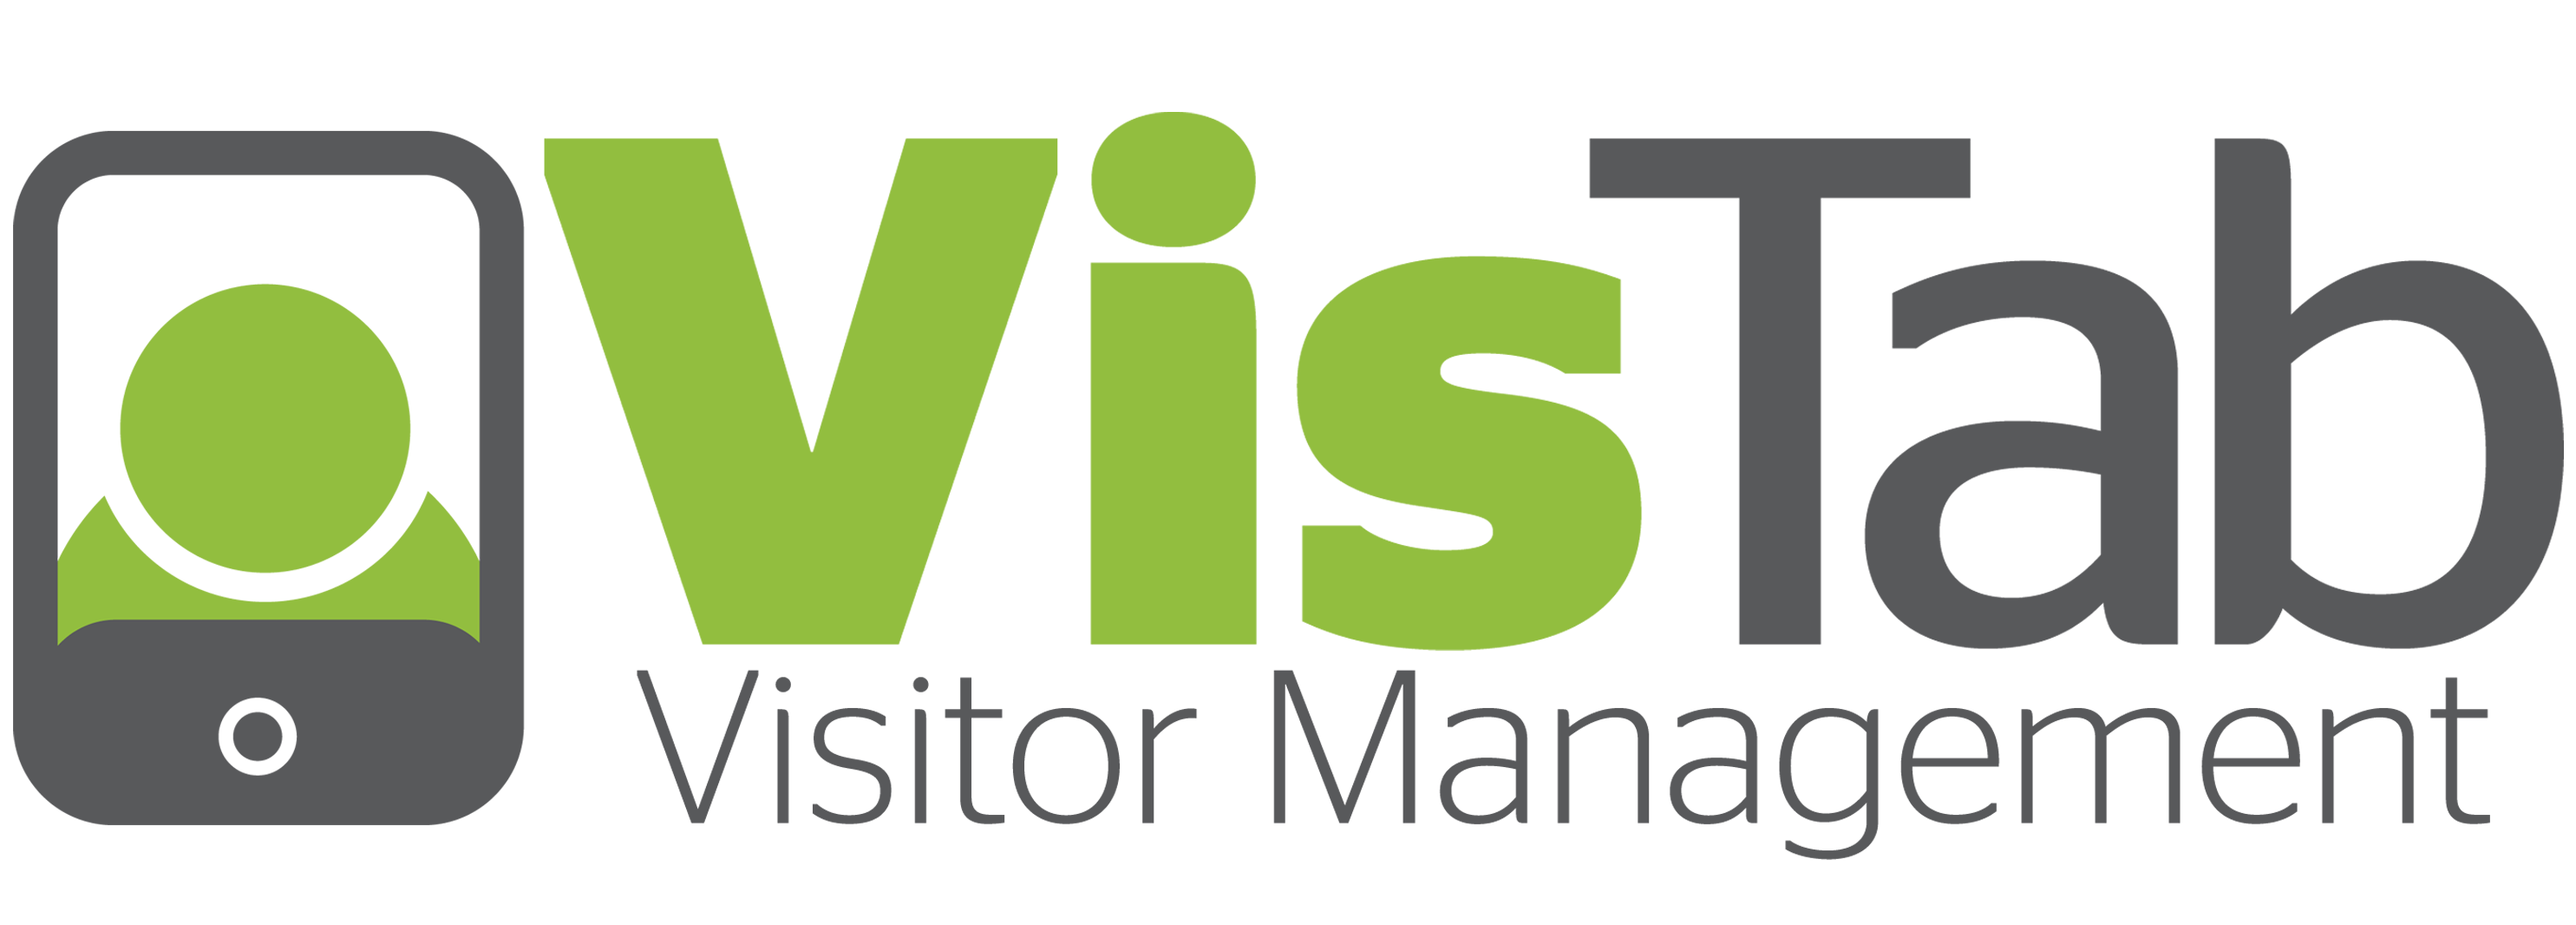 Vistab logo login